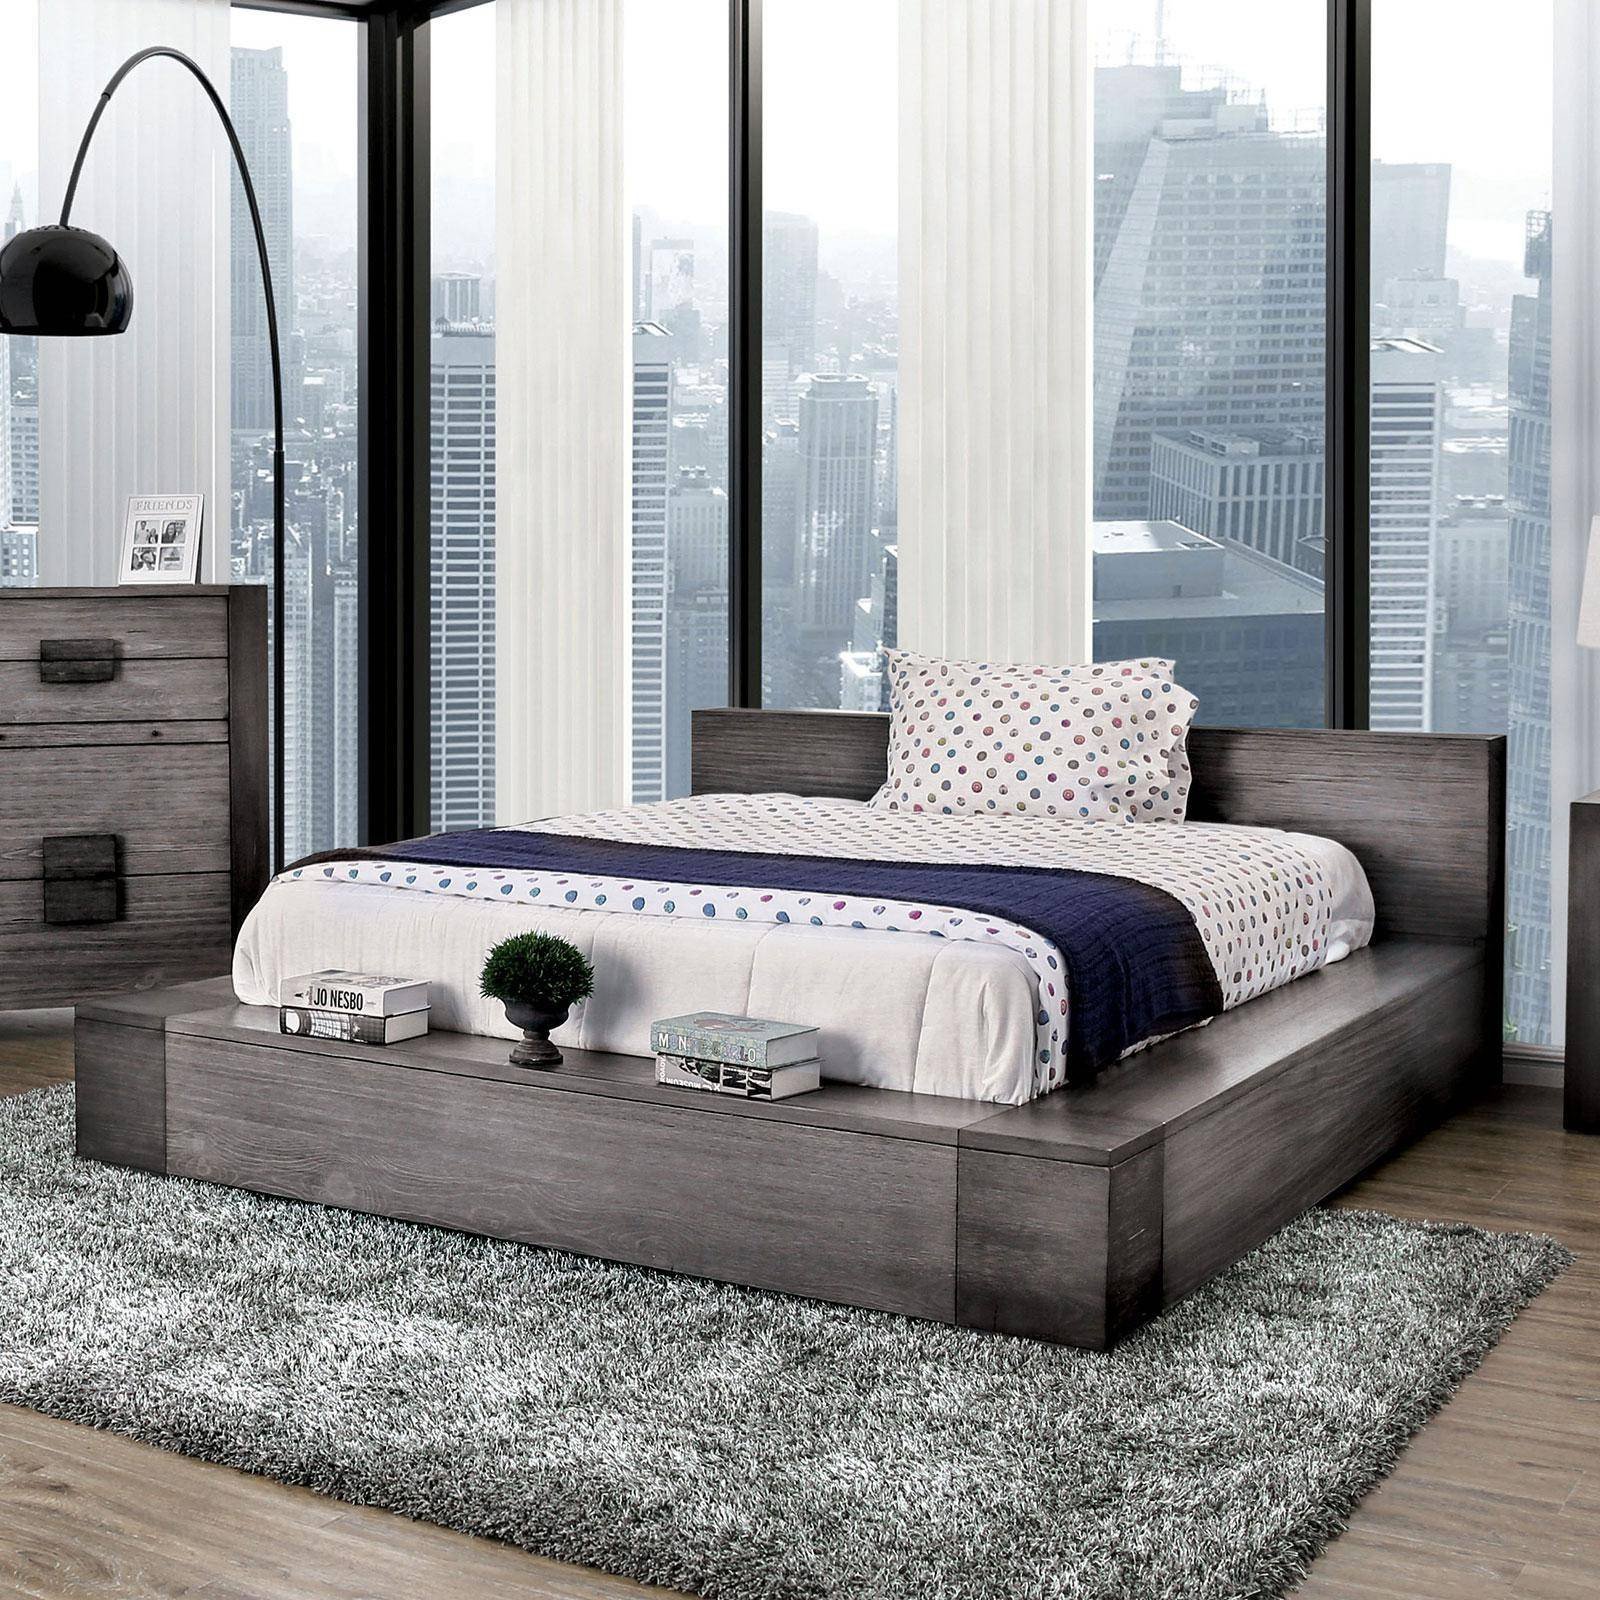 Natural Wood Bedroom Set Inspirational Rustic Gray Finish Queen Platform Bed Janeiro Furniture Of America